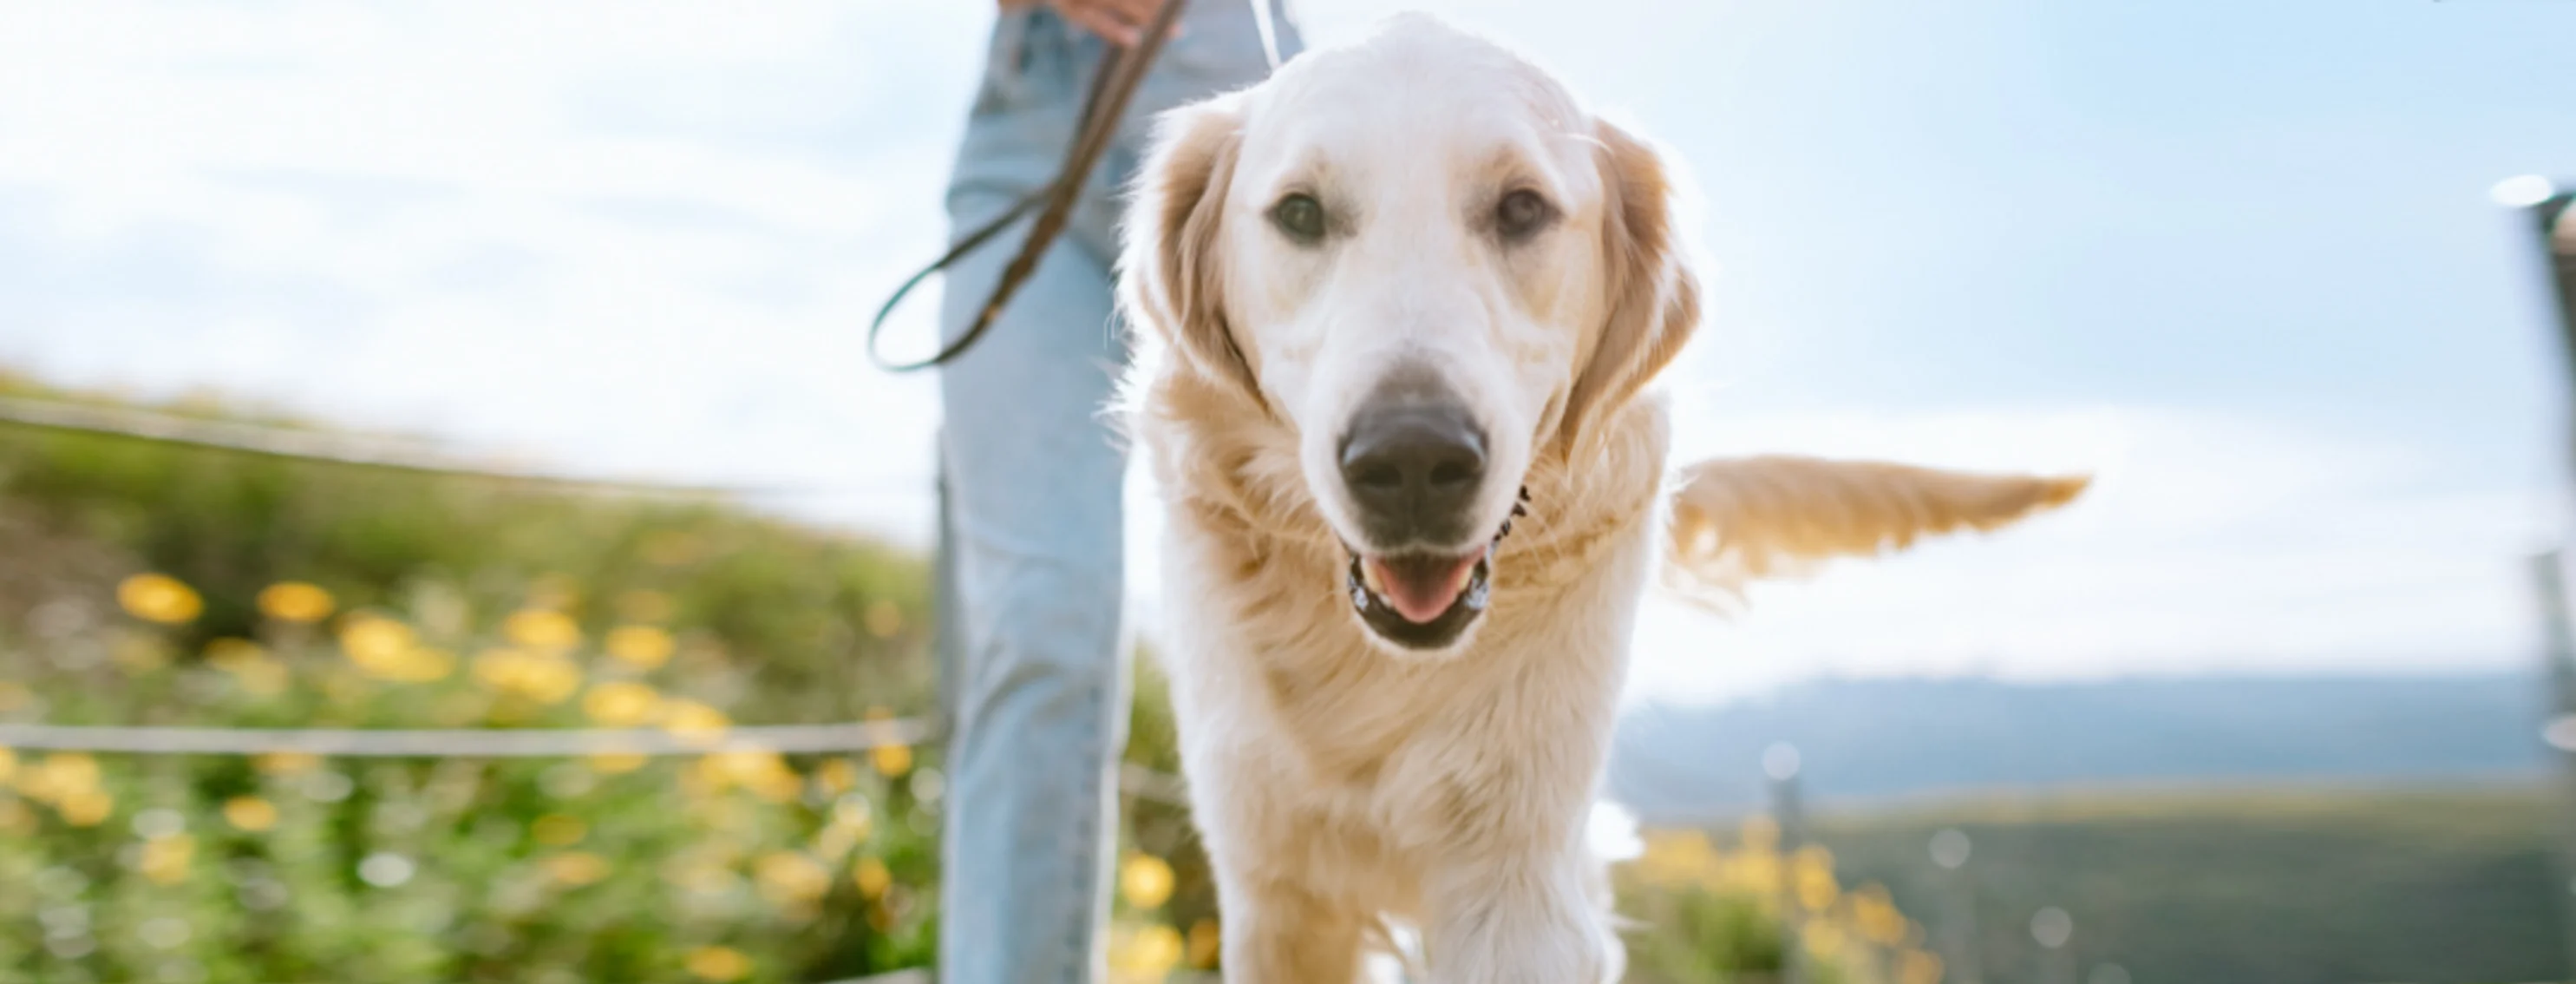 Owner Walking Golden Retriever (Dog) Outdoors